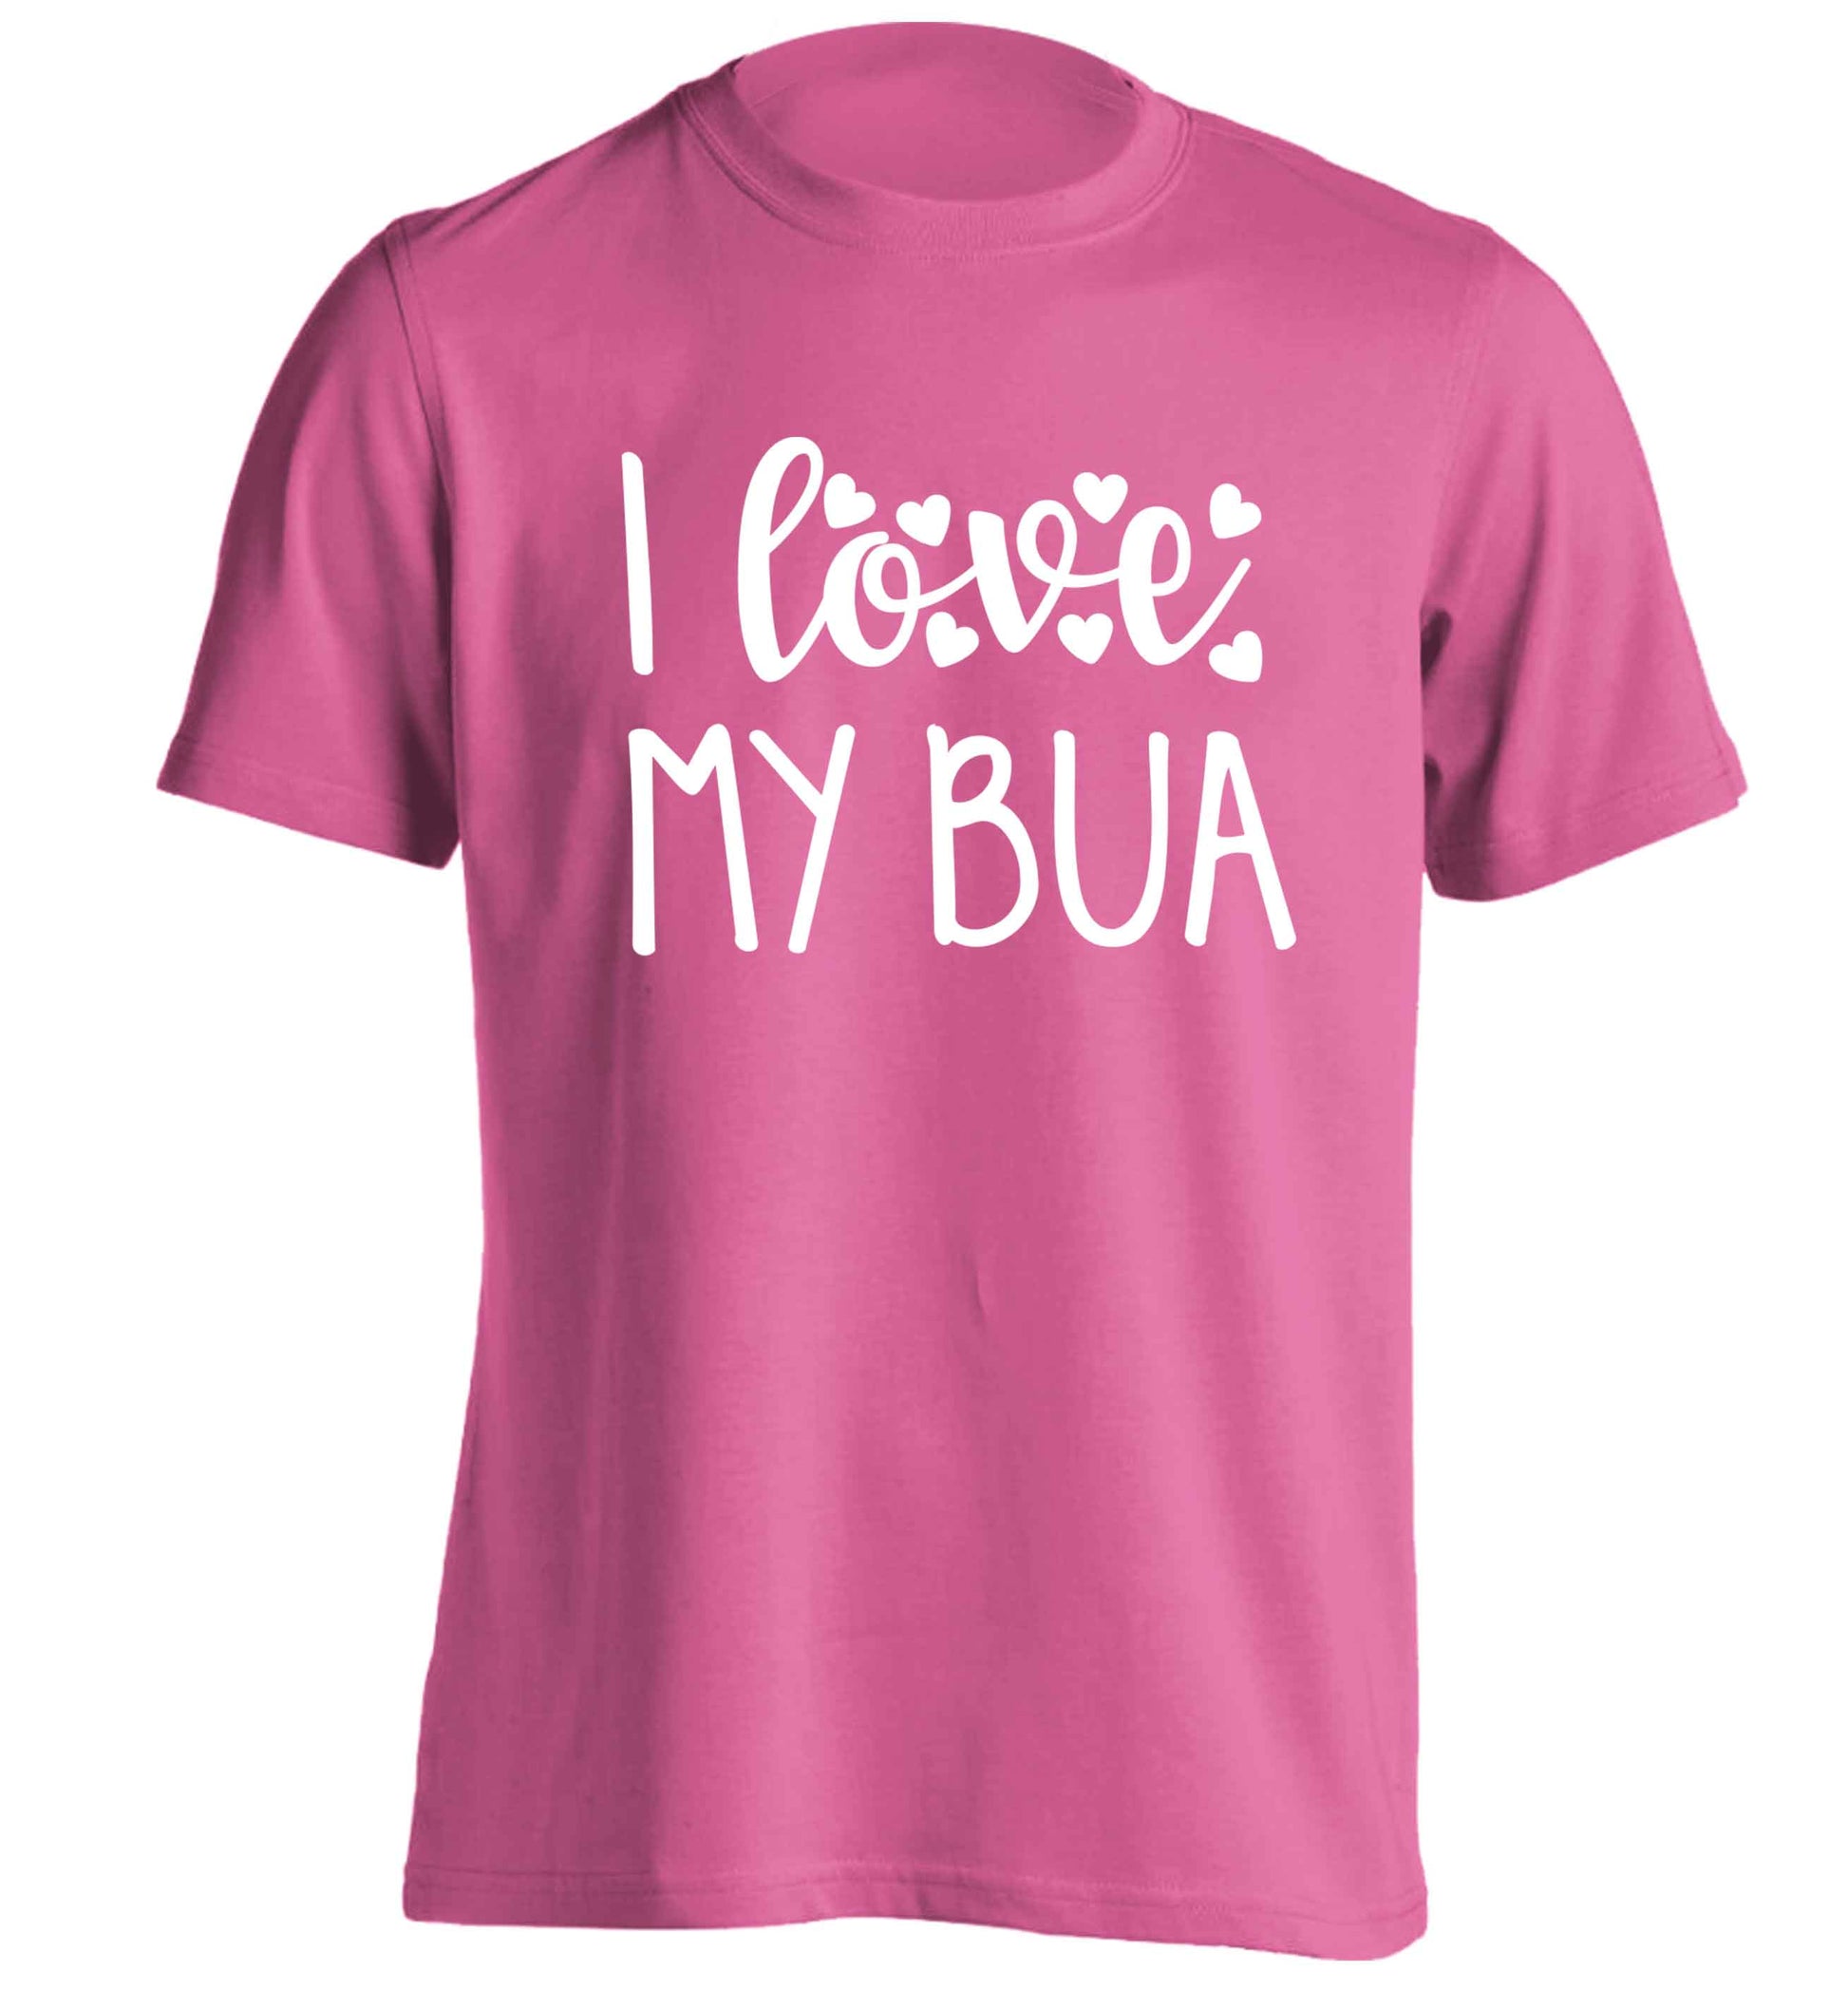 I love my bua adults unisex pink Tshirt 2XL